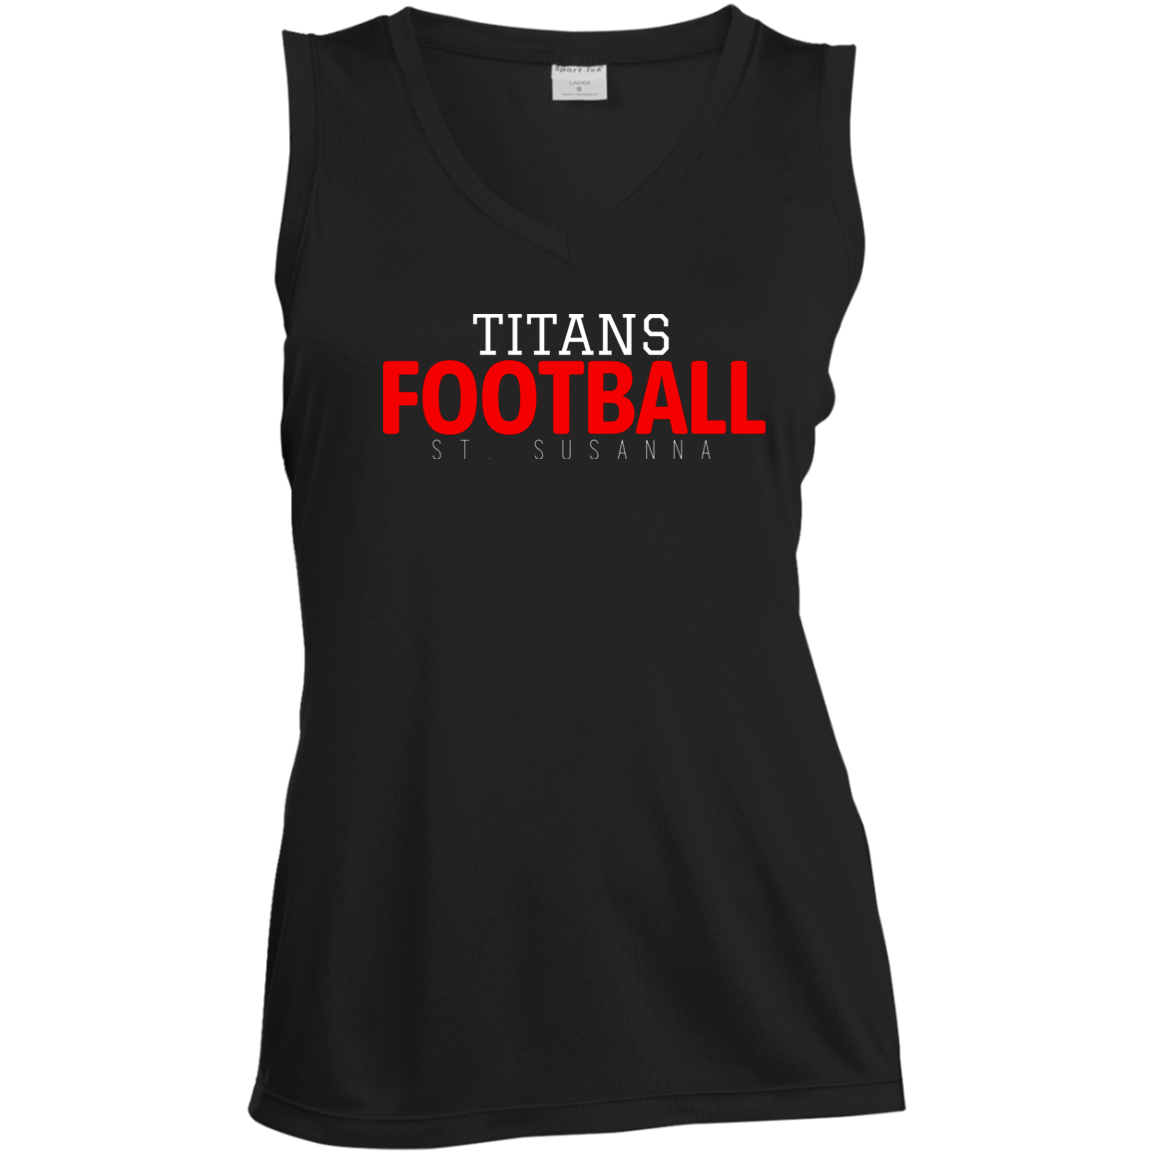 Titans Football St. Susanna (Black) Ladies' Sleeveless V-Neck Performance Tee